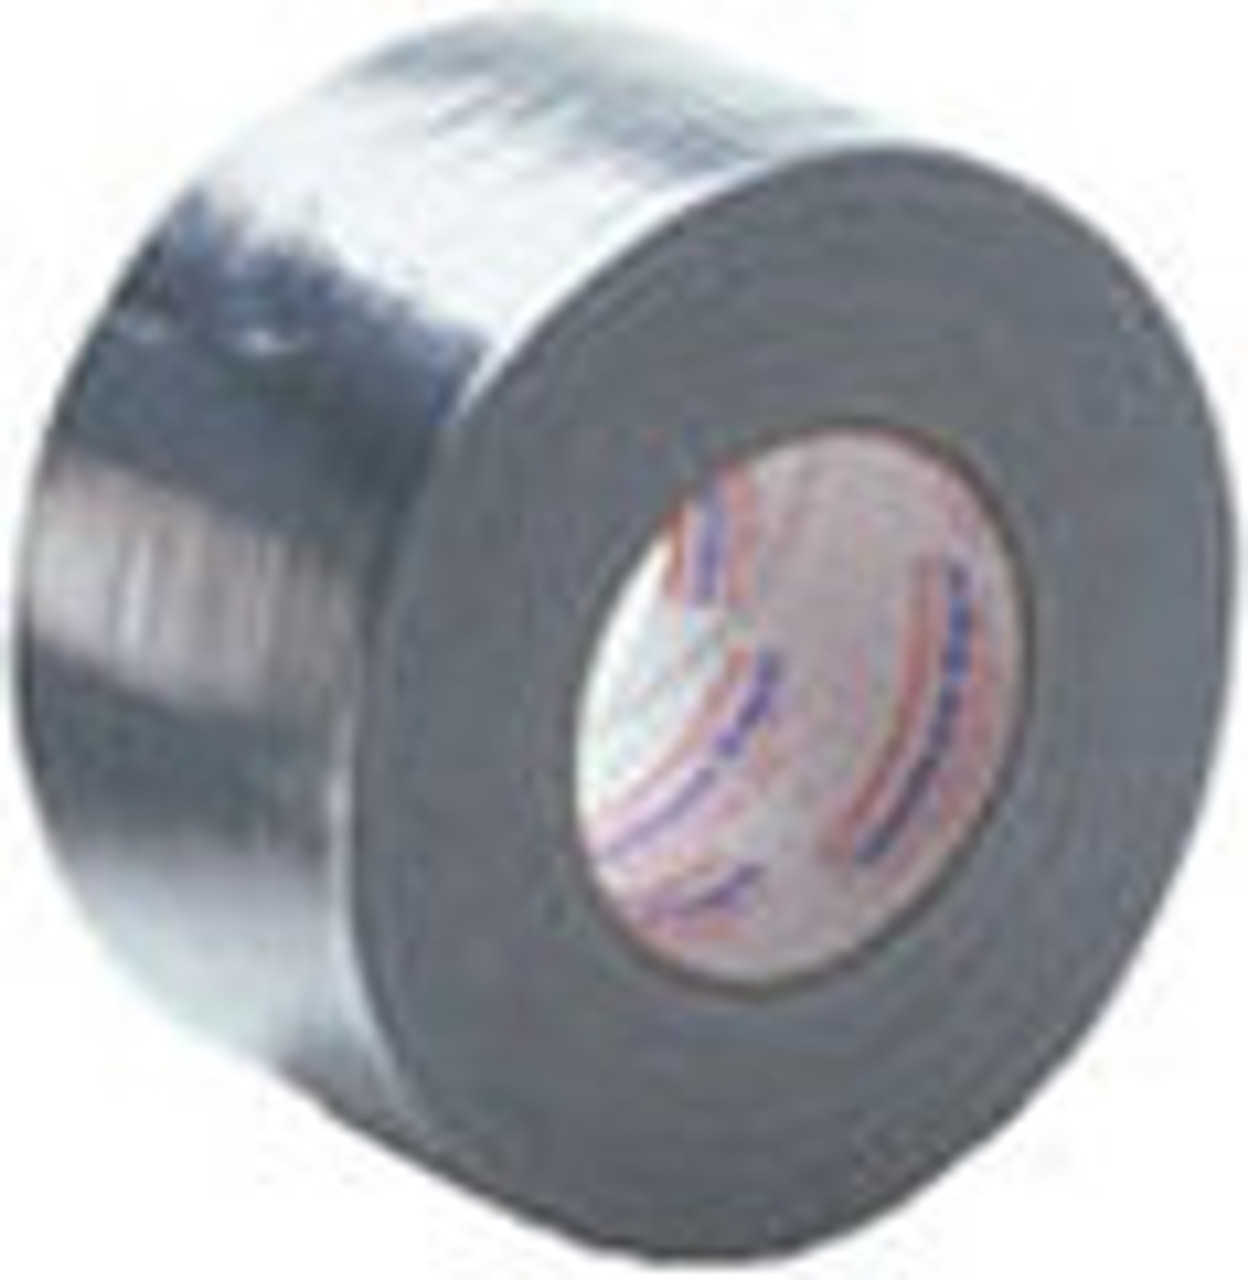 3M™ Venture Tape™ Polypropylene Duct Tape 2, 120 Yards, 3 mil (Silver)